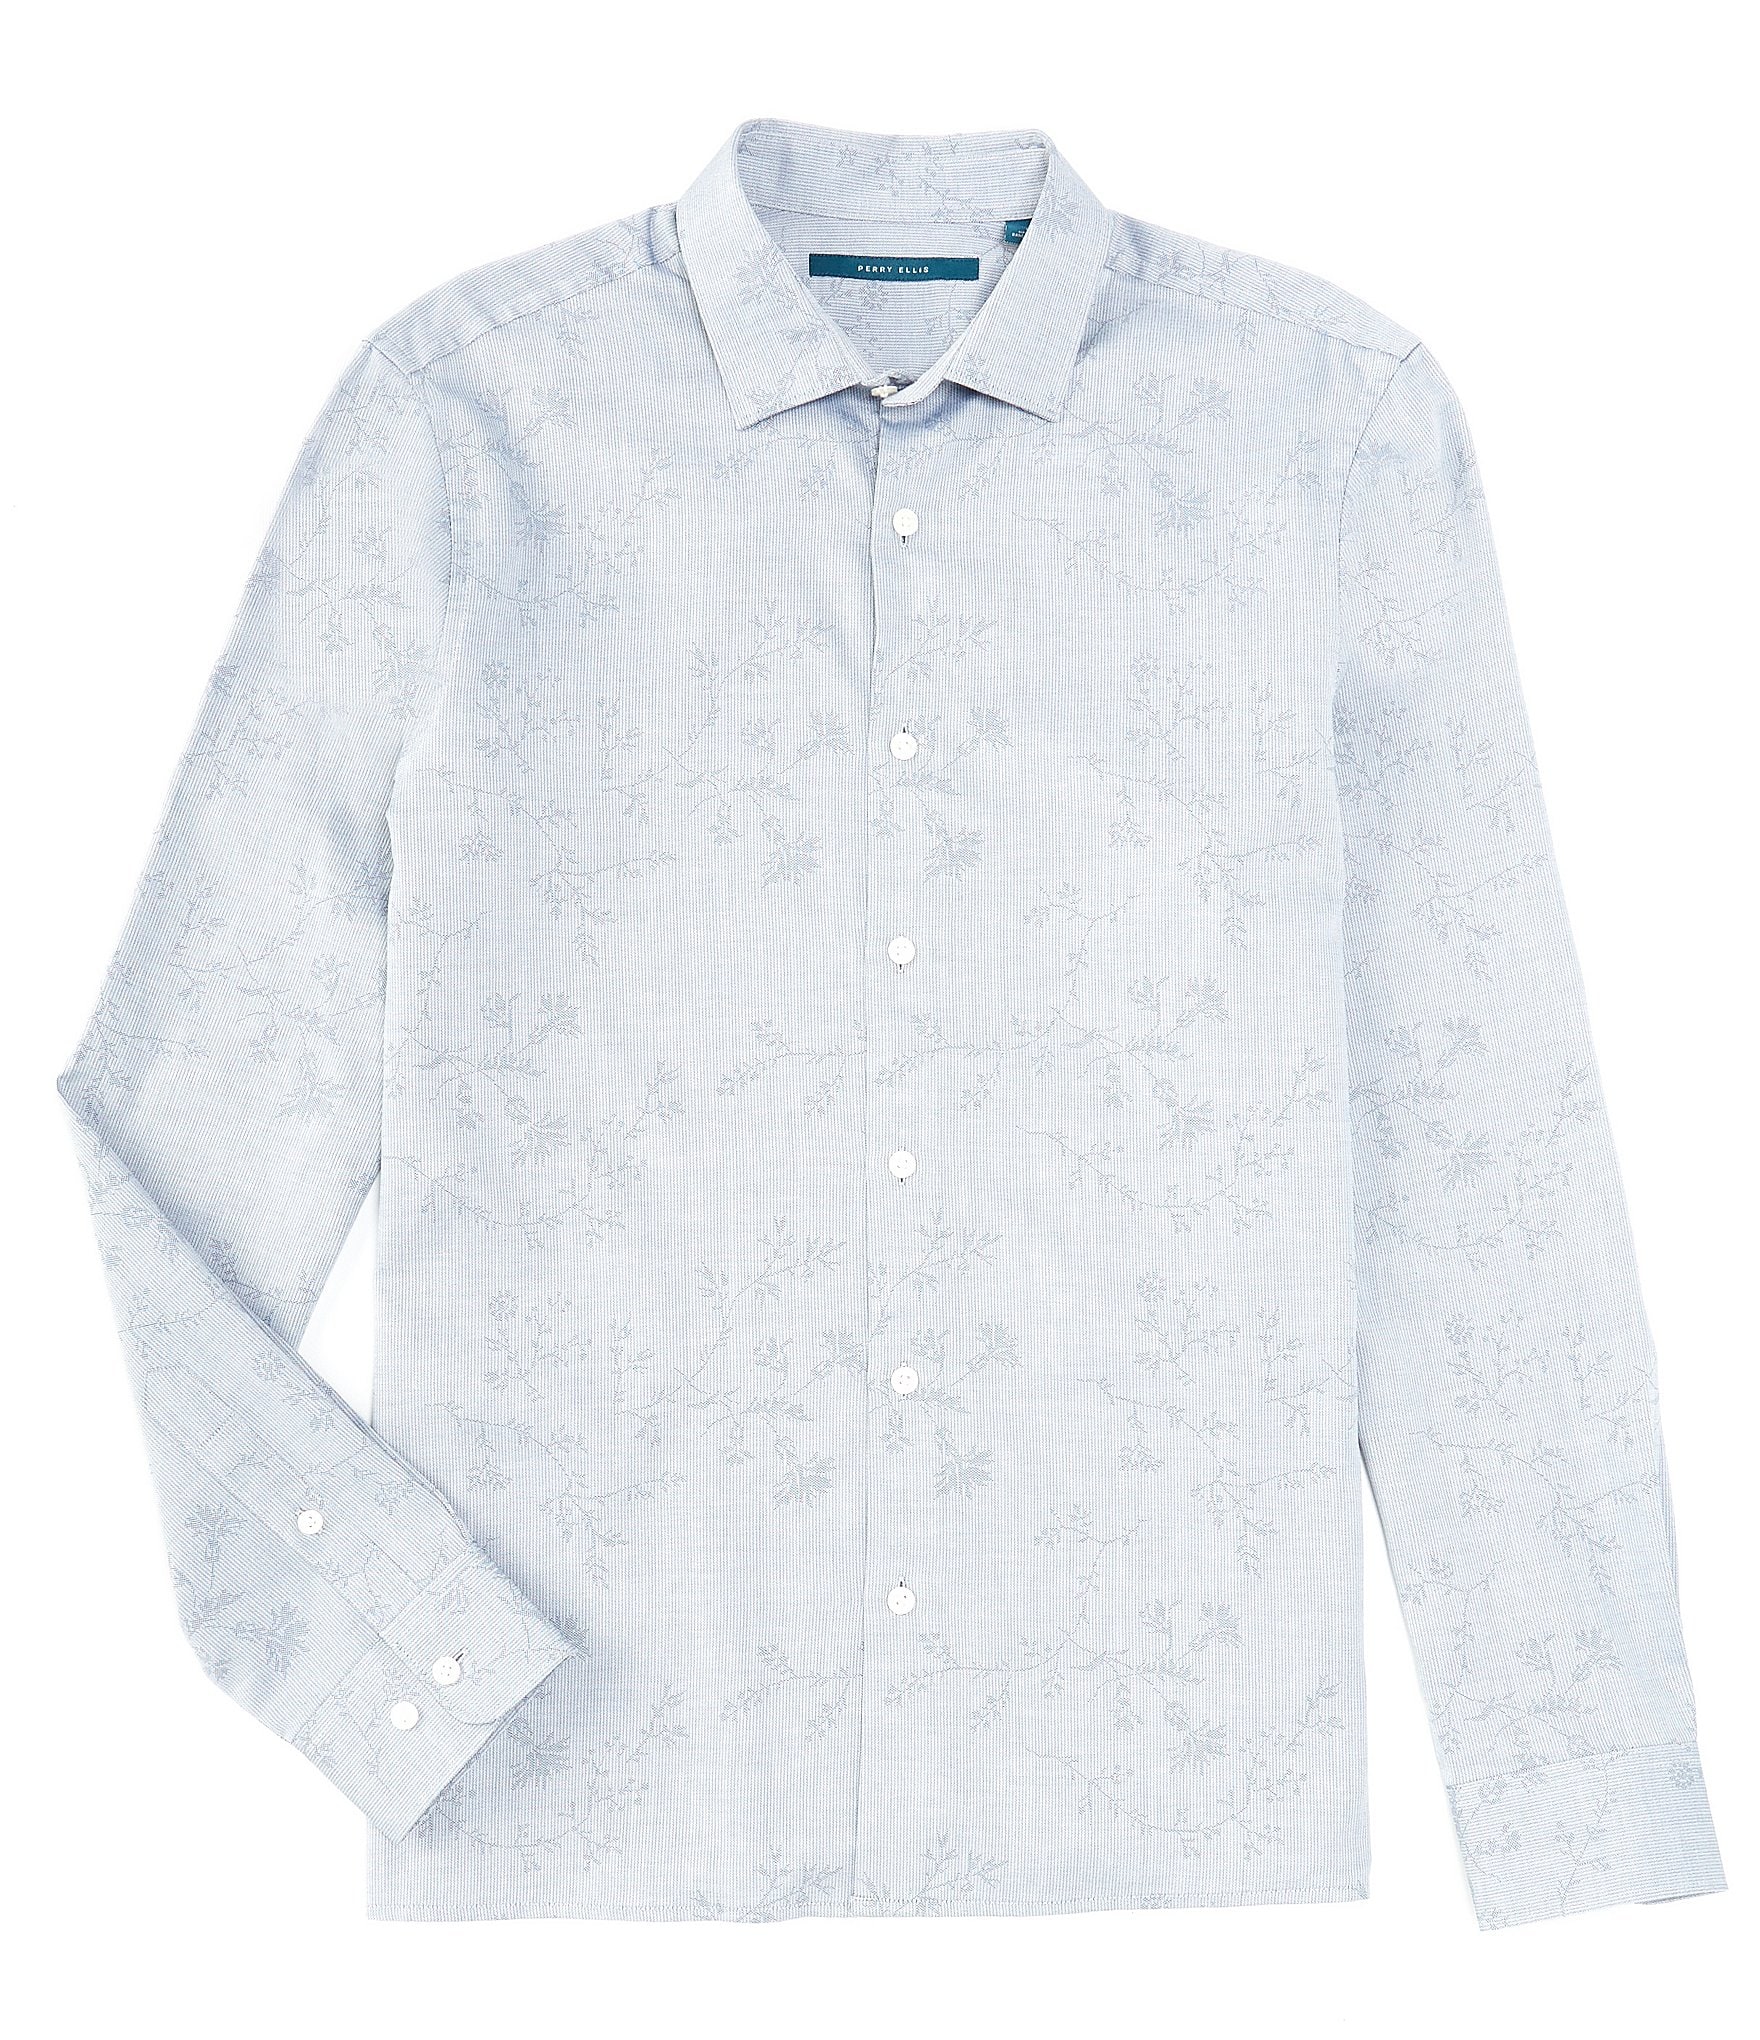 Perry Ellis Men's Floral Print Jacquard Long Sleeve Shirt